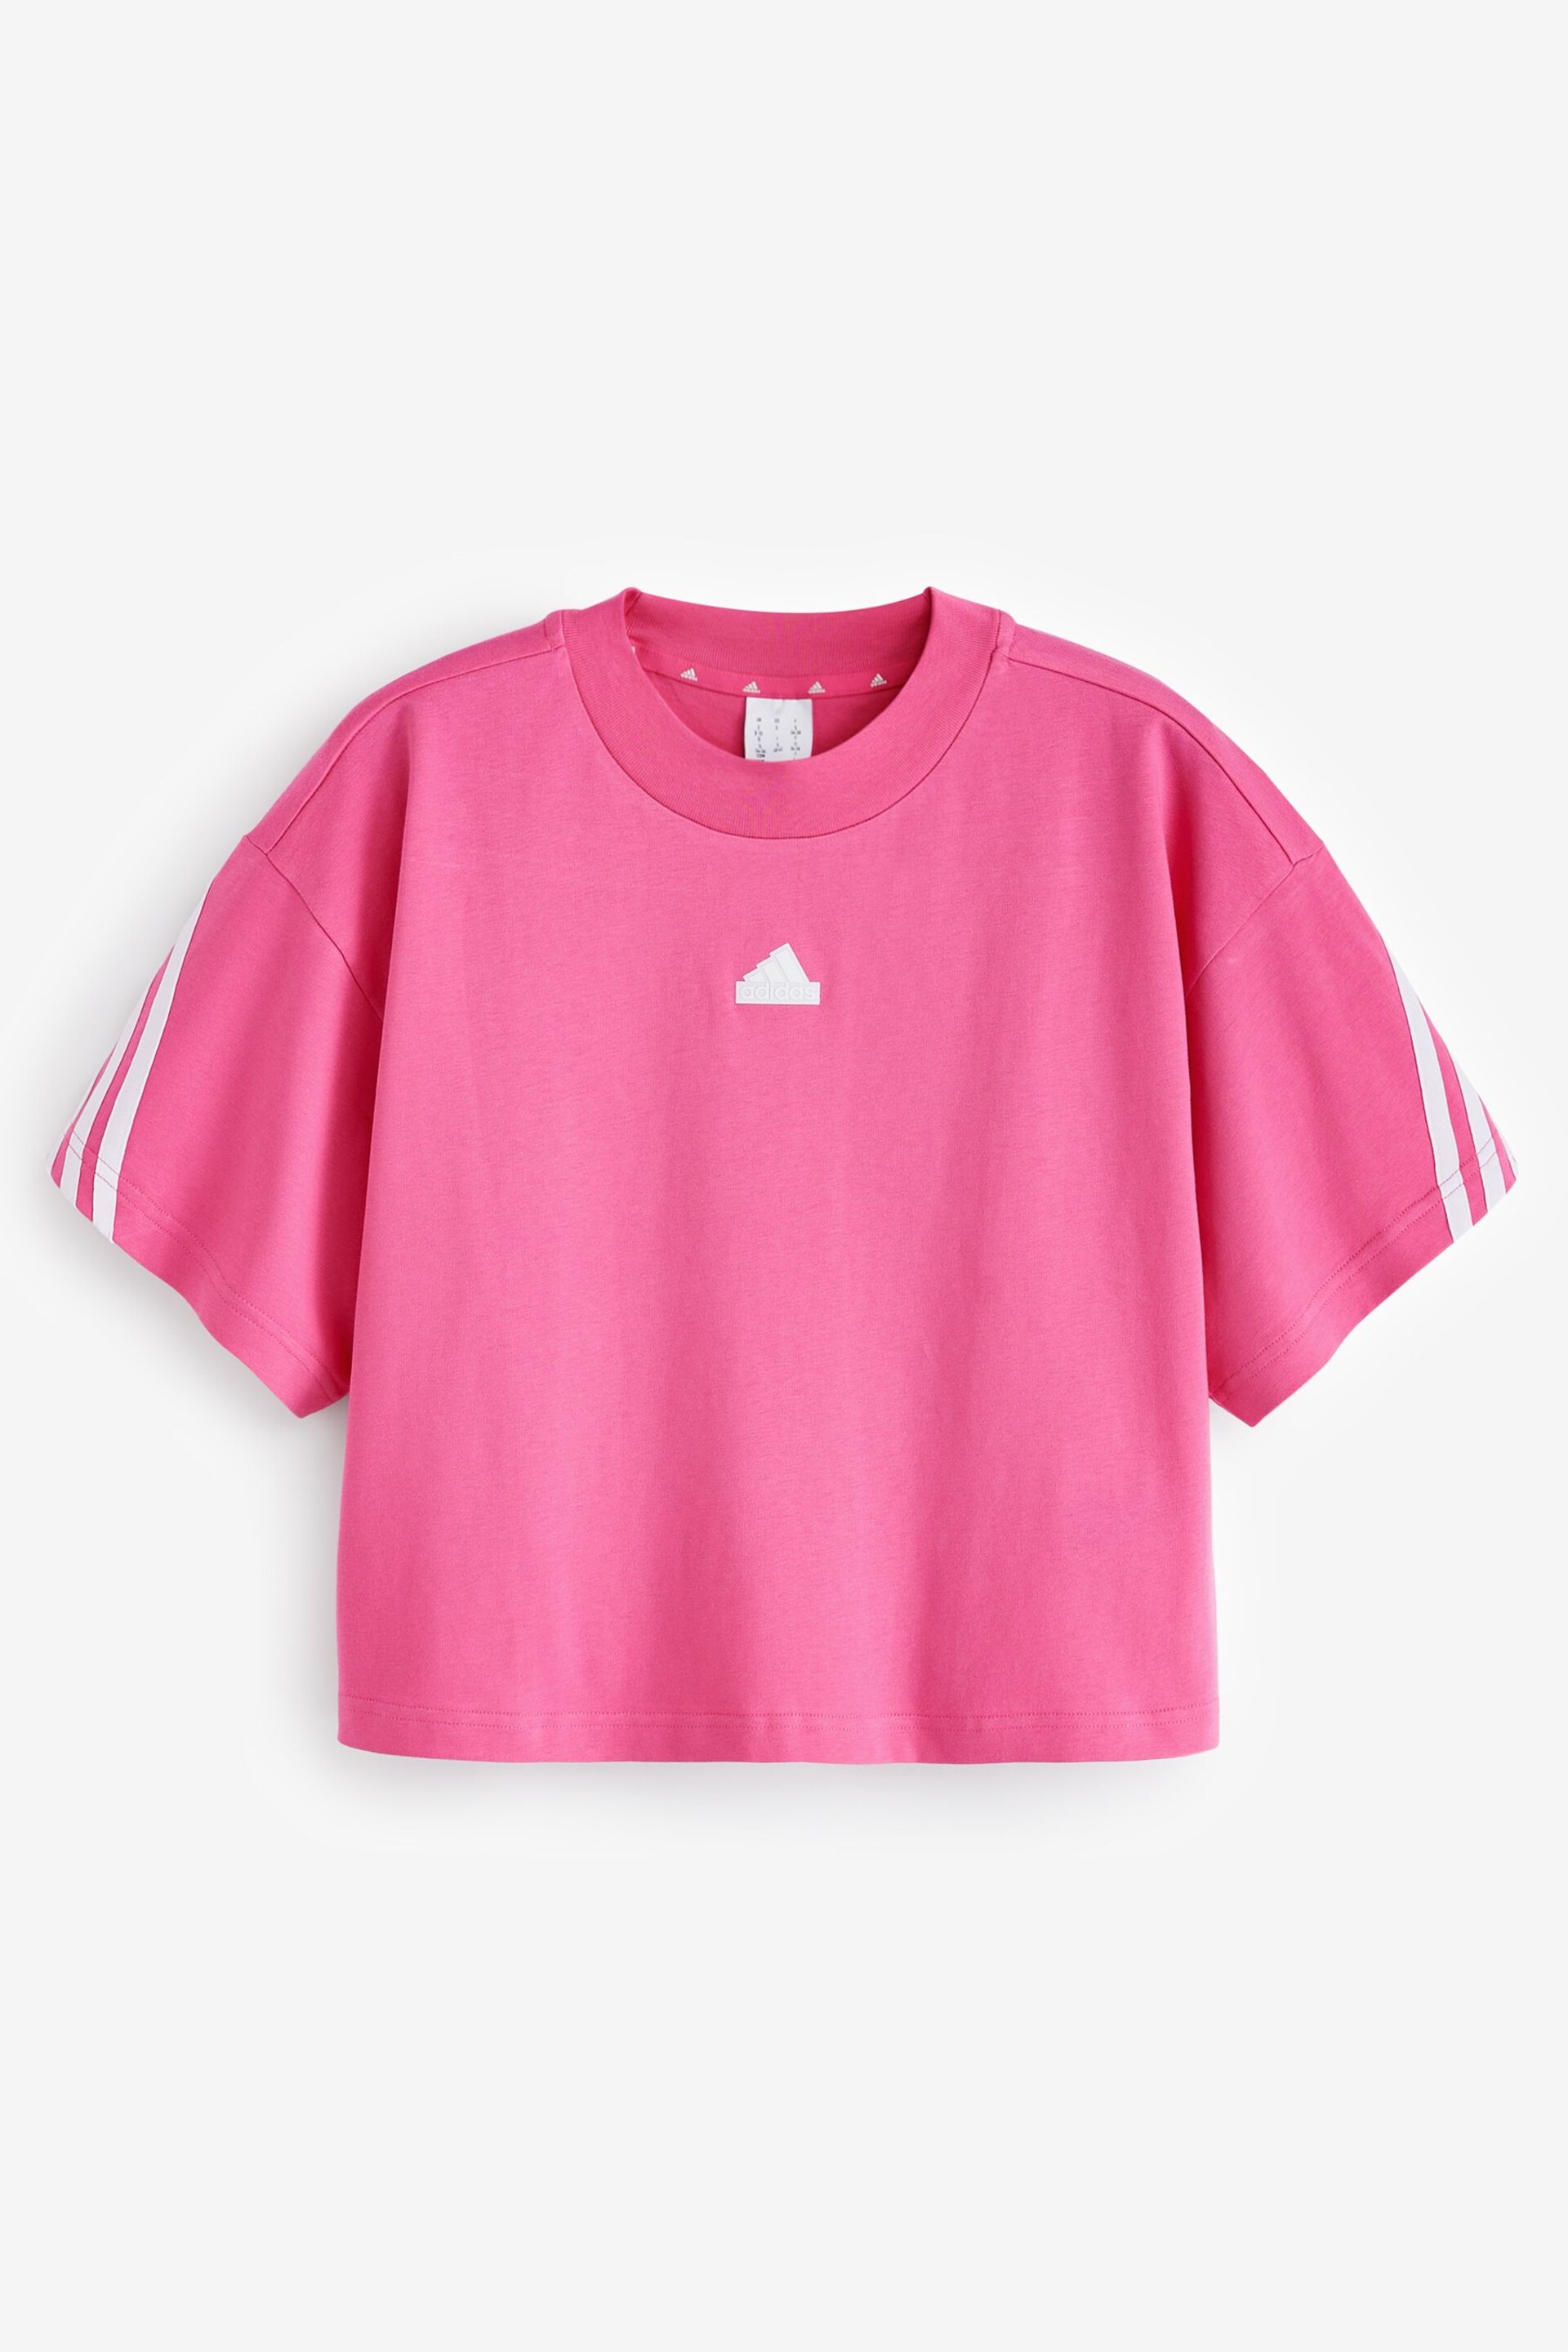 adidas Pink Sportswear Future Icons 3-Stripes T-Shirt - Image 1 of 1